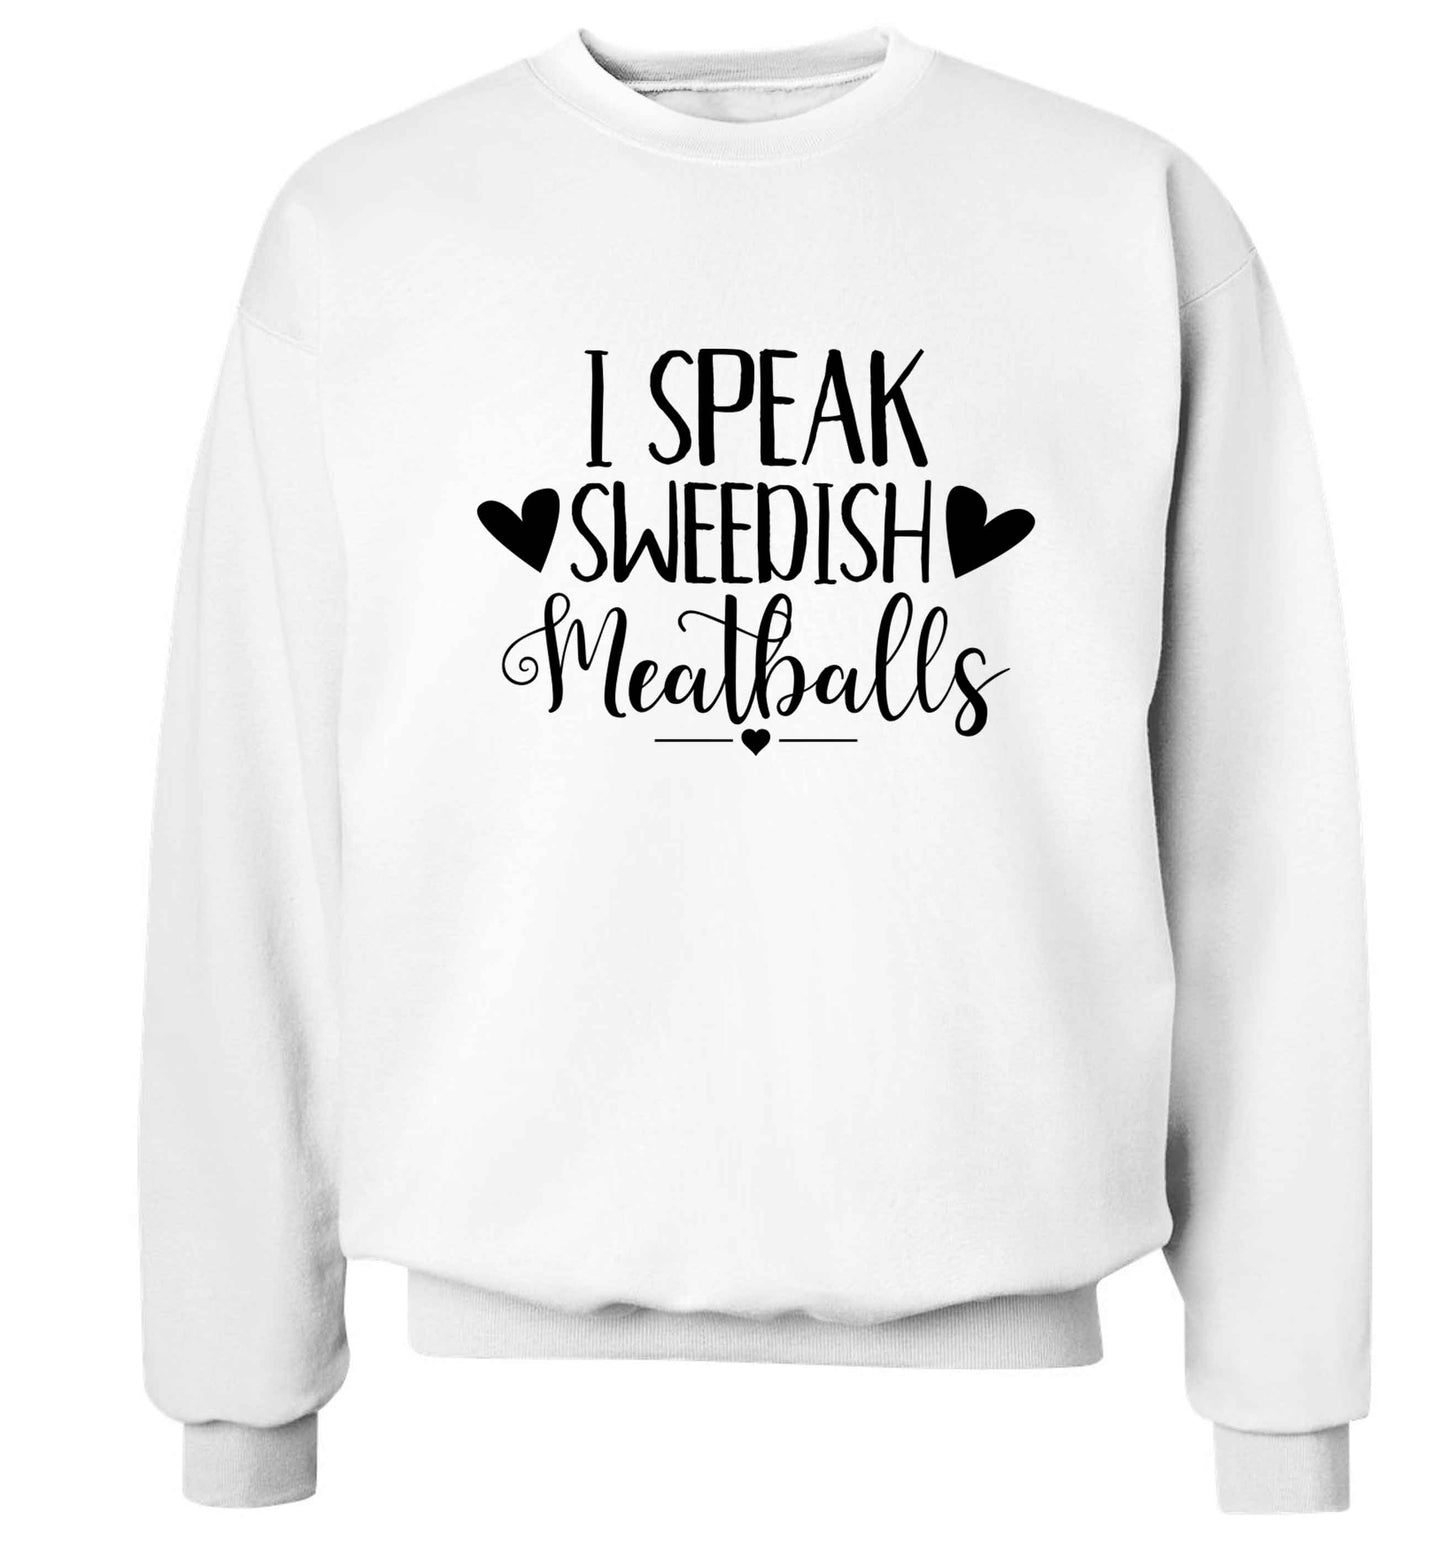 I speak sweedish...meatballs Adult's unisex white Sweater 2XL